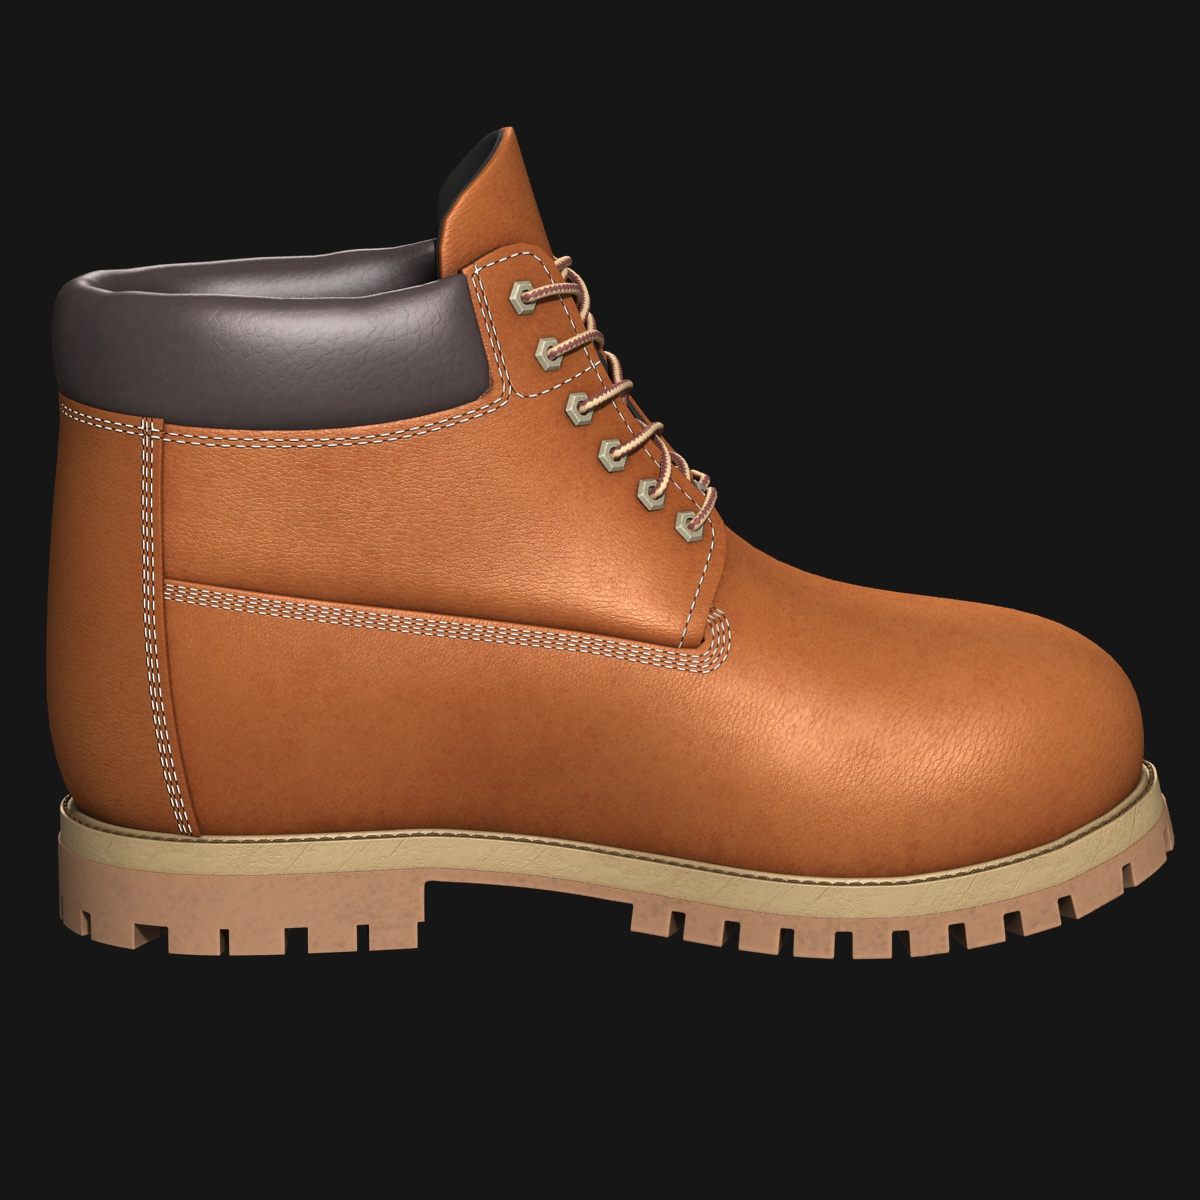 max raised leather boot